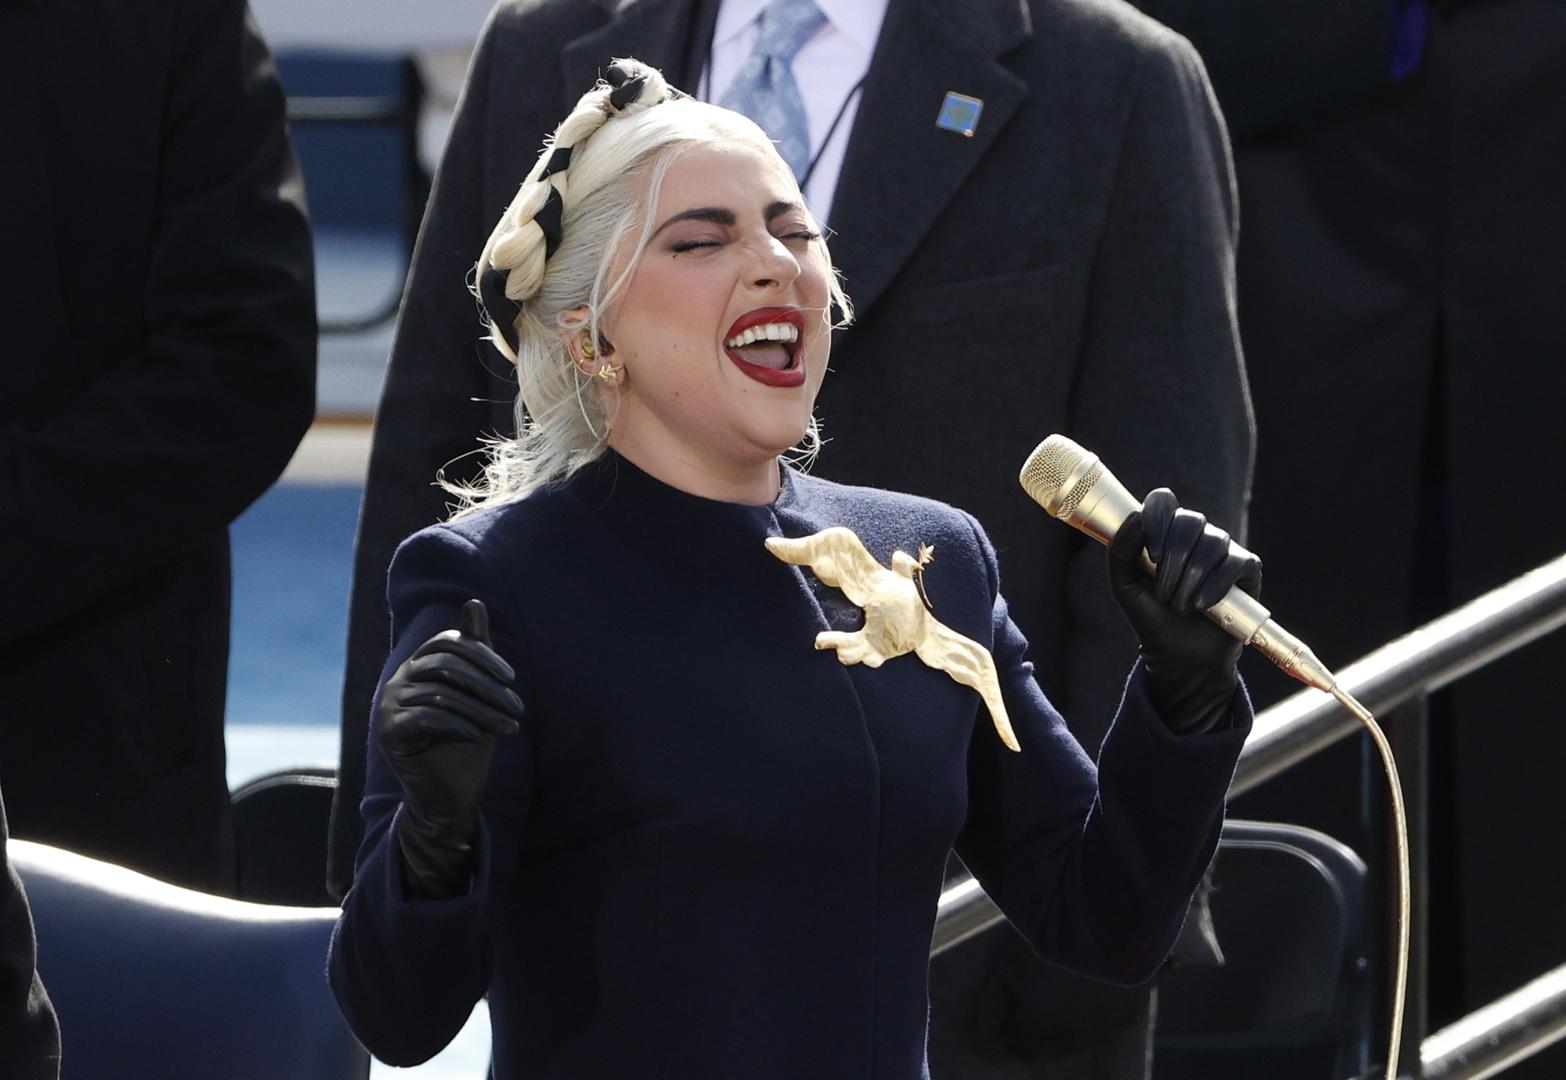 Inauguration of Joe Biden as the 46th President of the United States Lady Gaga sings the National Anthem during the inauguration of Joe Biden as the 46th President of the United States on the West Front of the U.S. Capitol in Washington, U.S., January 20, 2021. REUTERS/Brendan McDermid BRENDAN MCDERMID